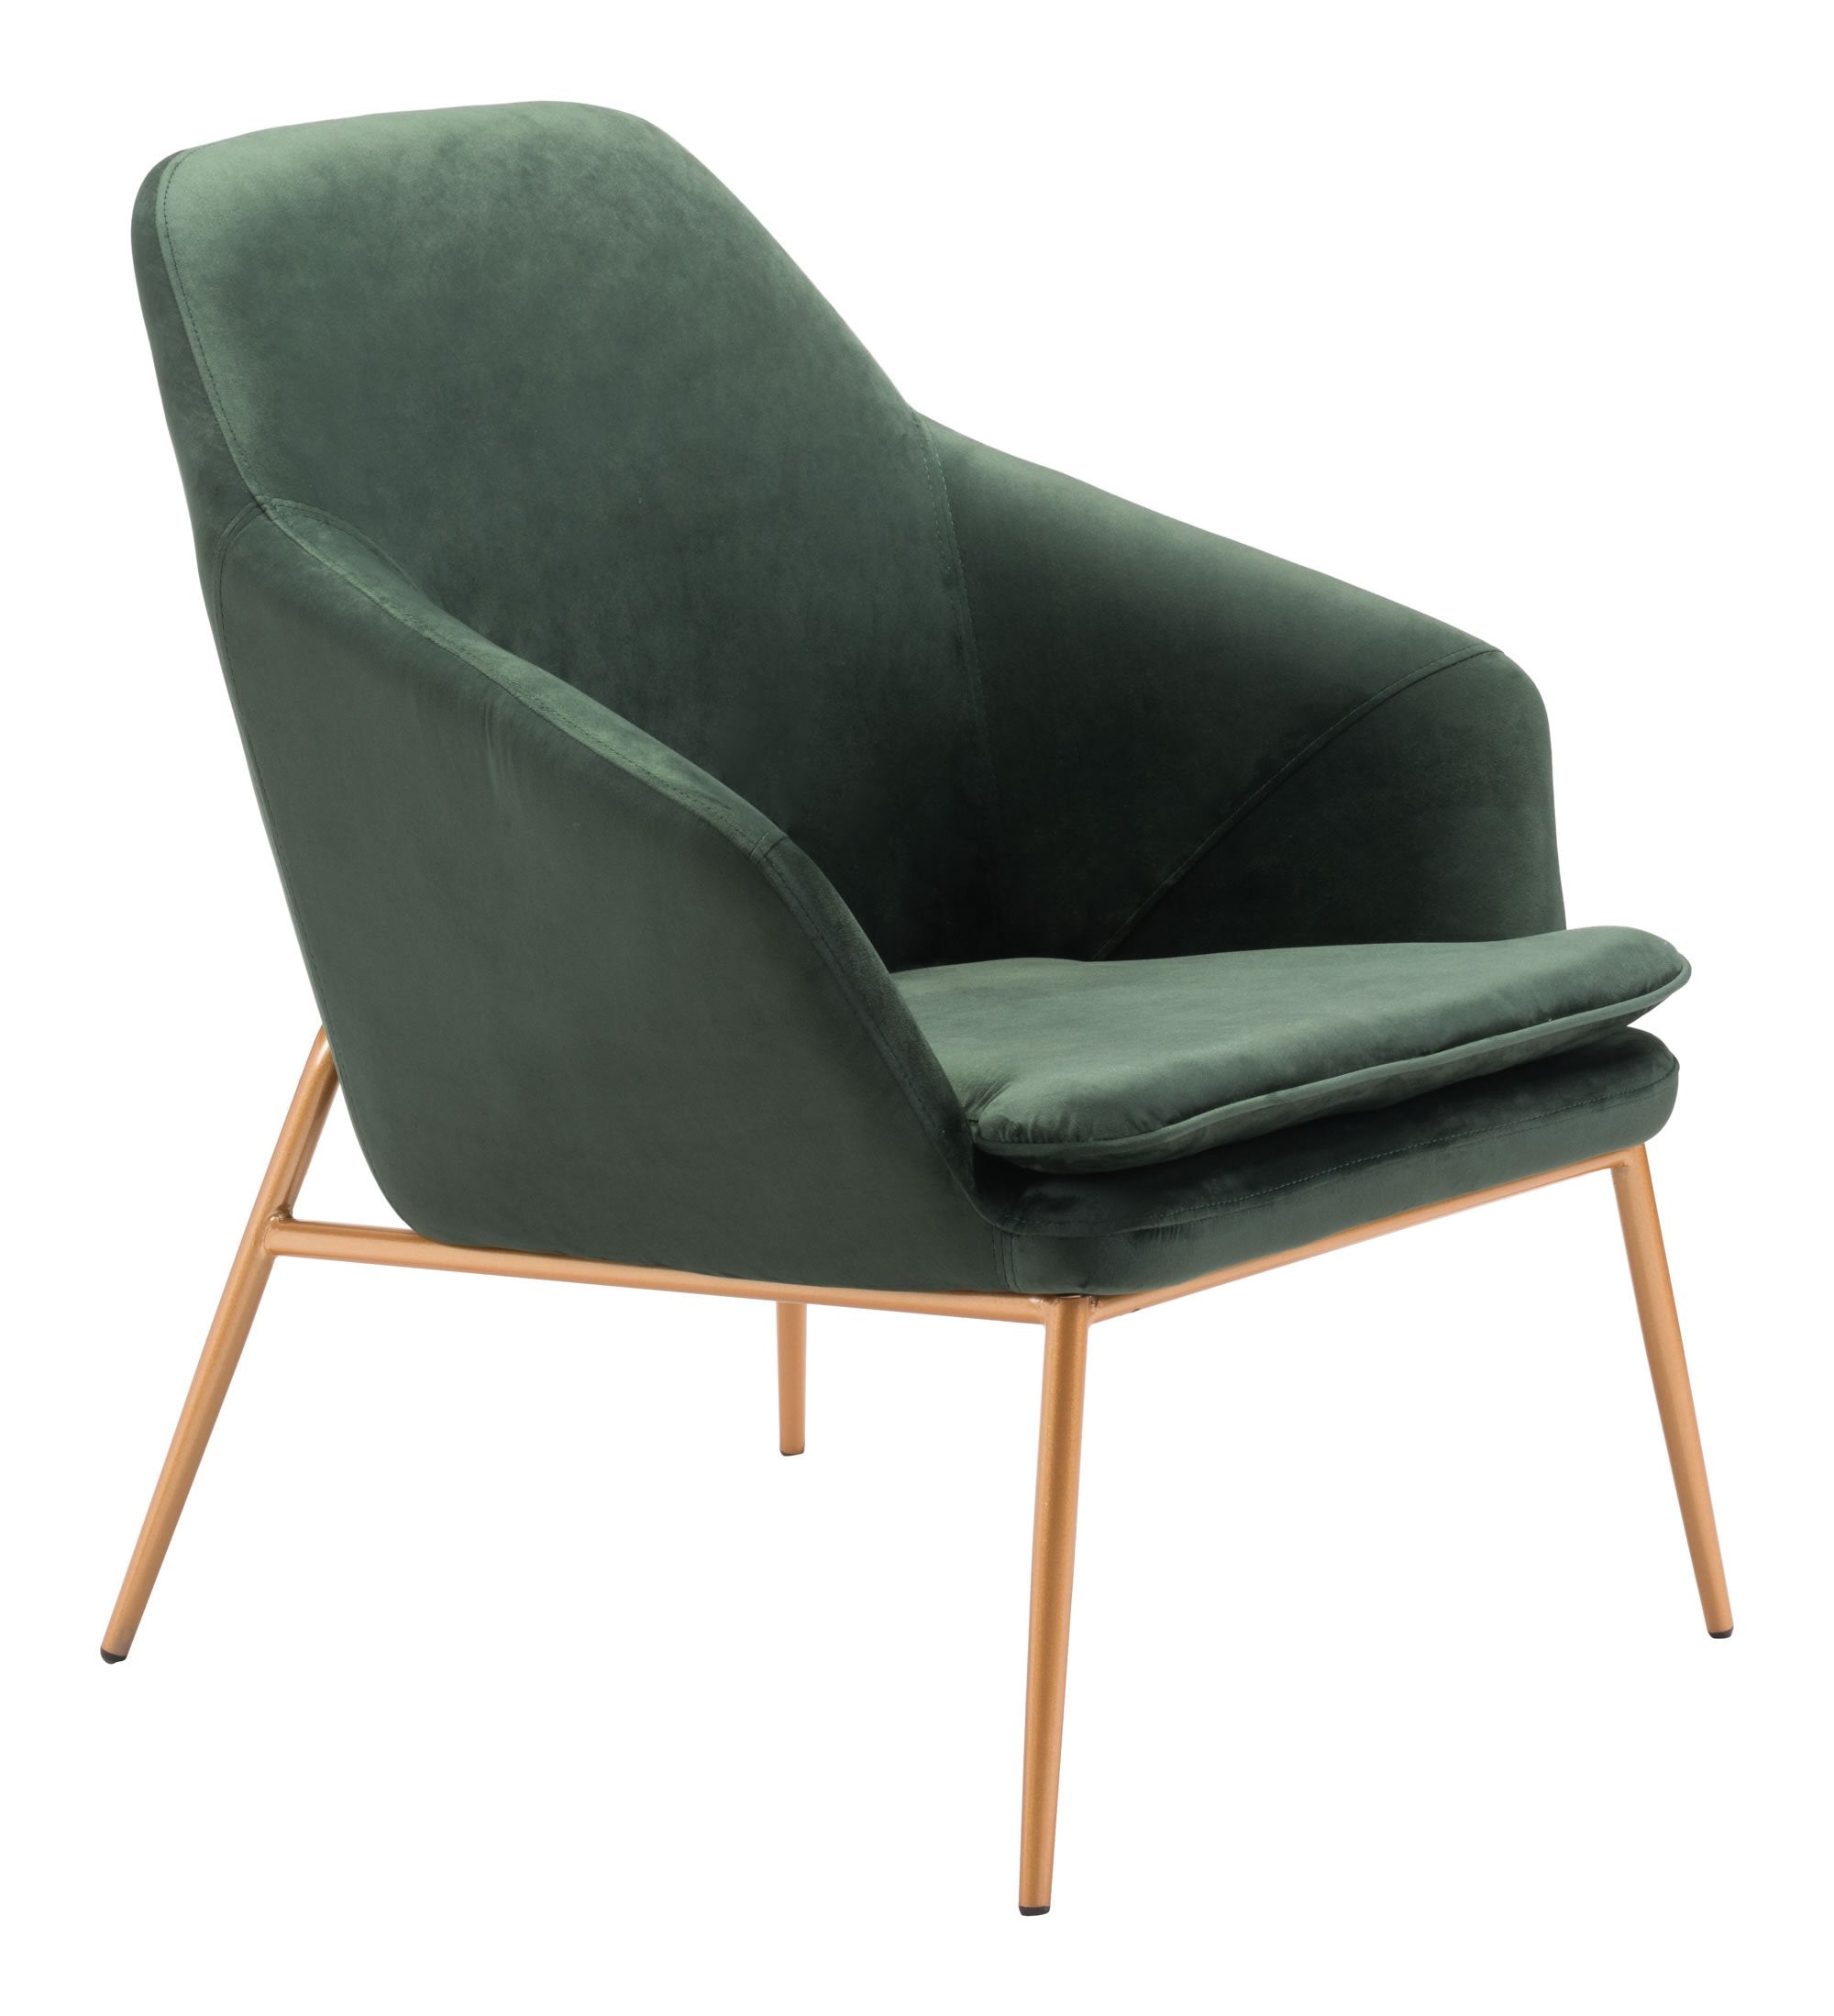 34" Green Velvet Metal Arm Chair